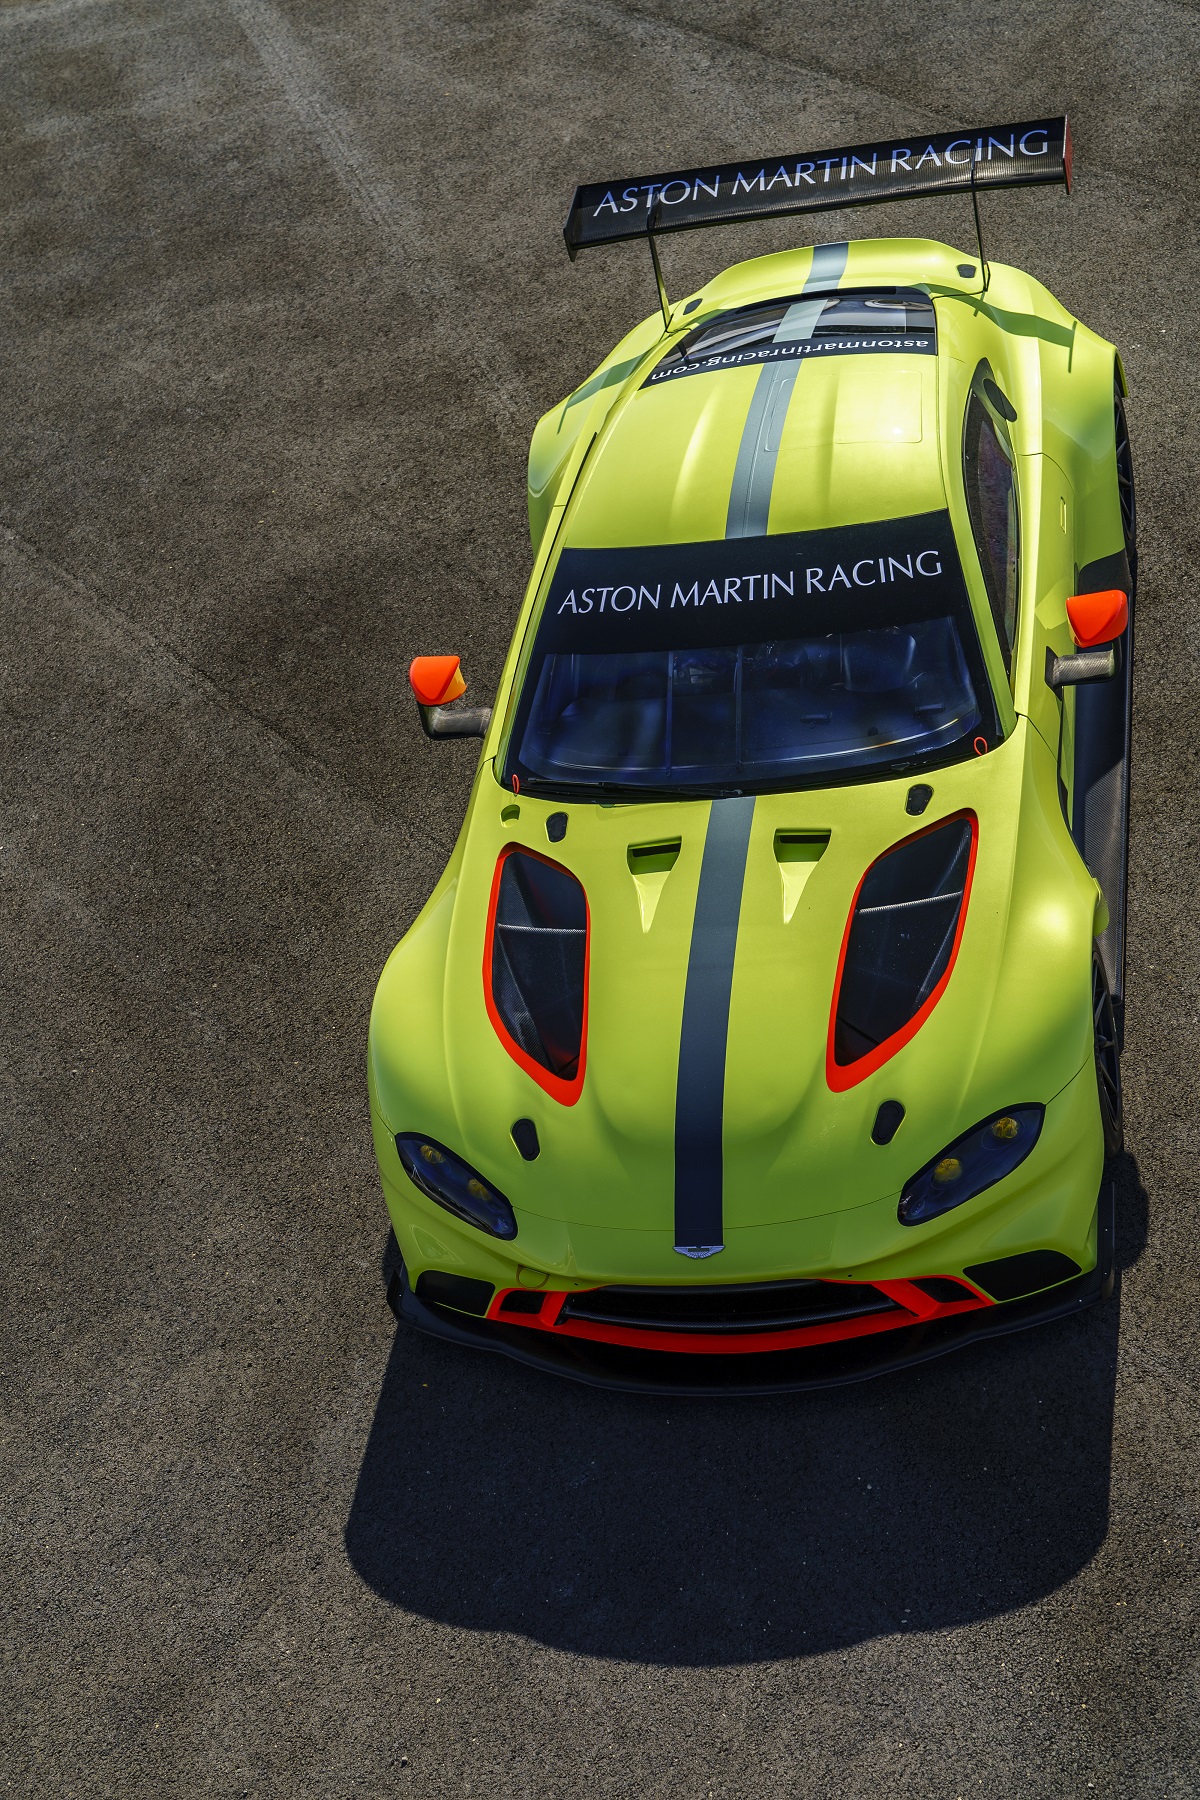 Aston_Martin_Racing2018_Vantage_GTE05-jpg.jpg